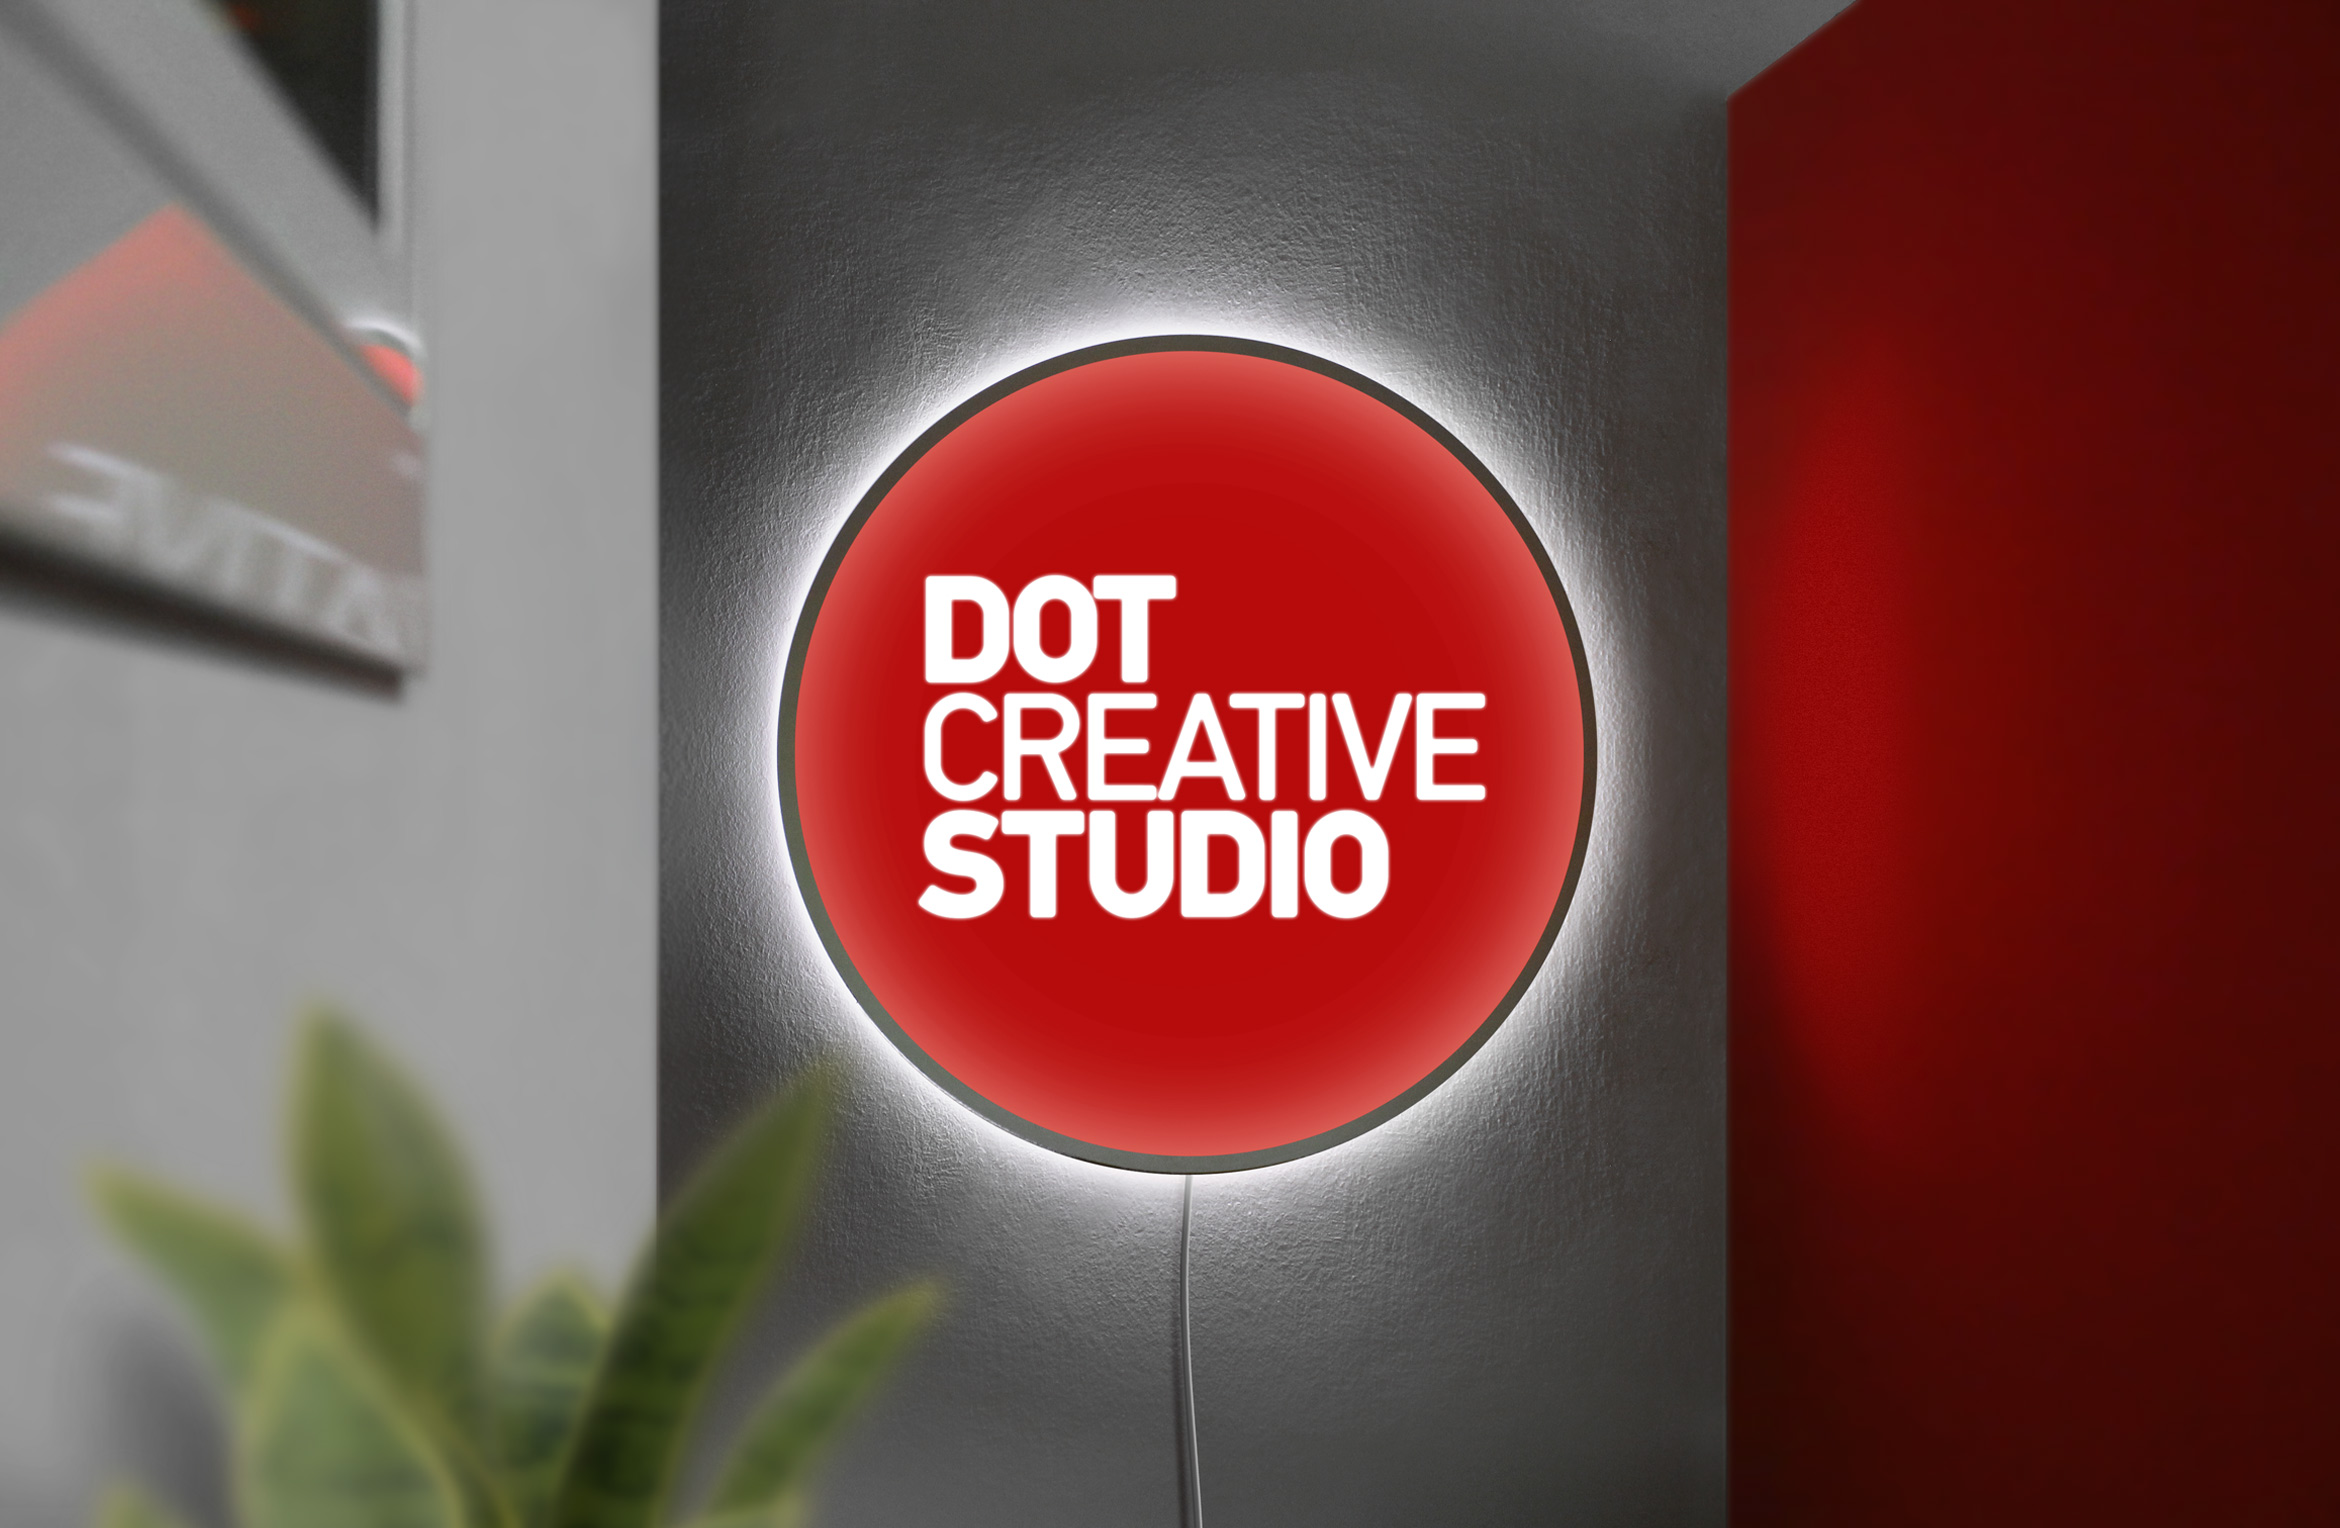 Dot Creative Studio sign